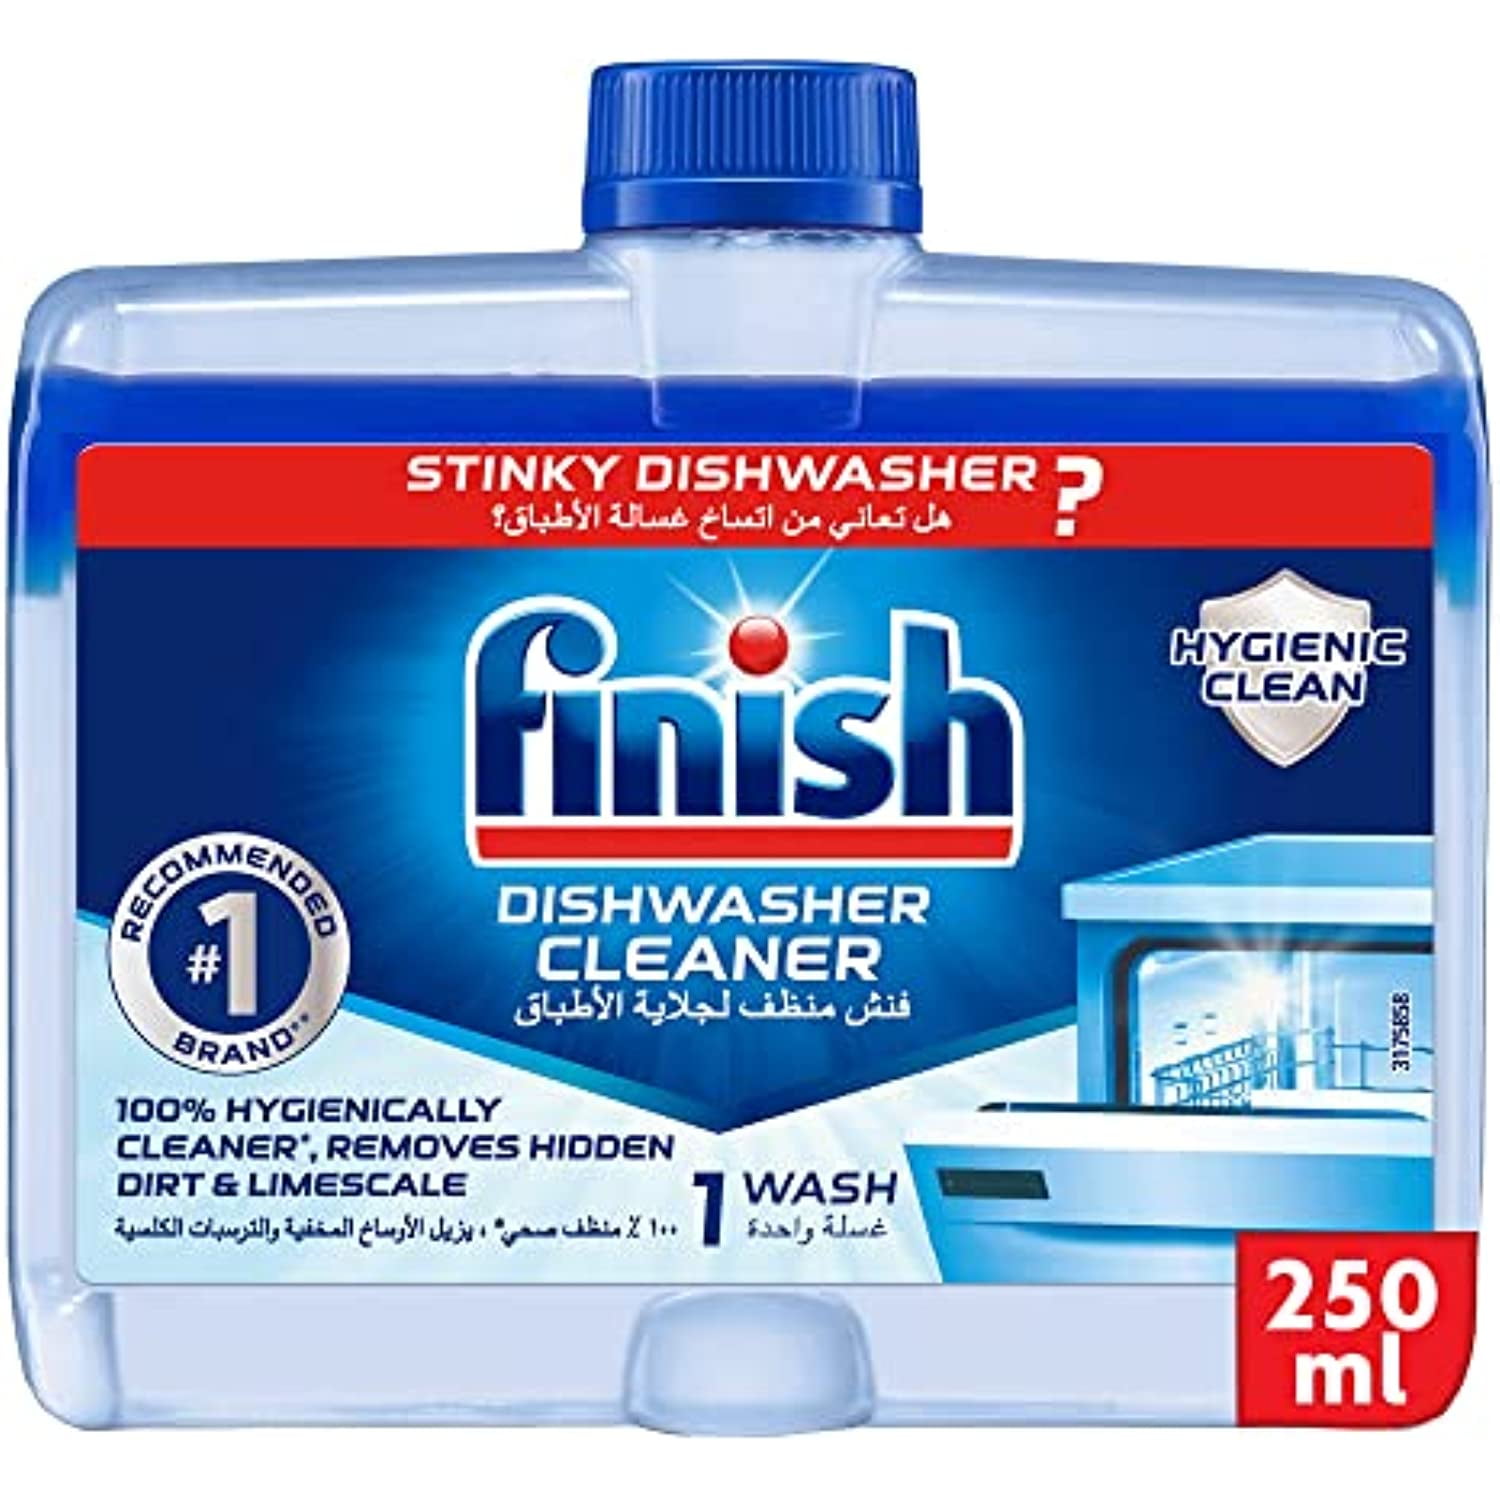 Finish Dishwasher Cleaner - 8.45 fl oz